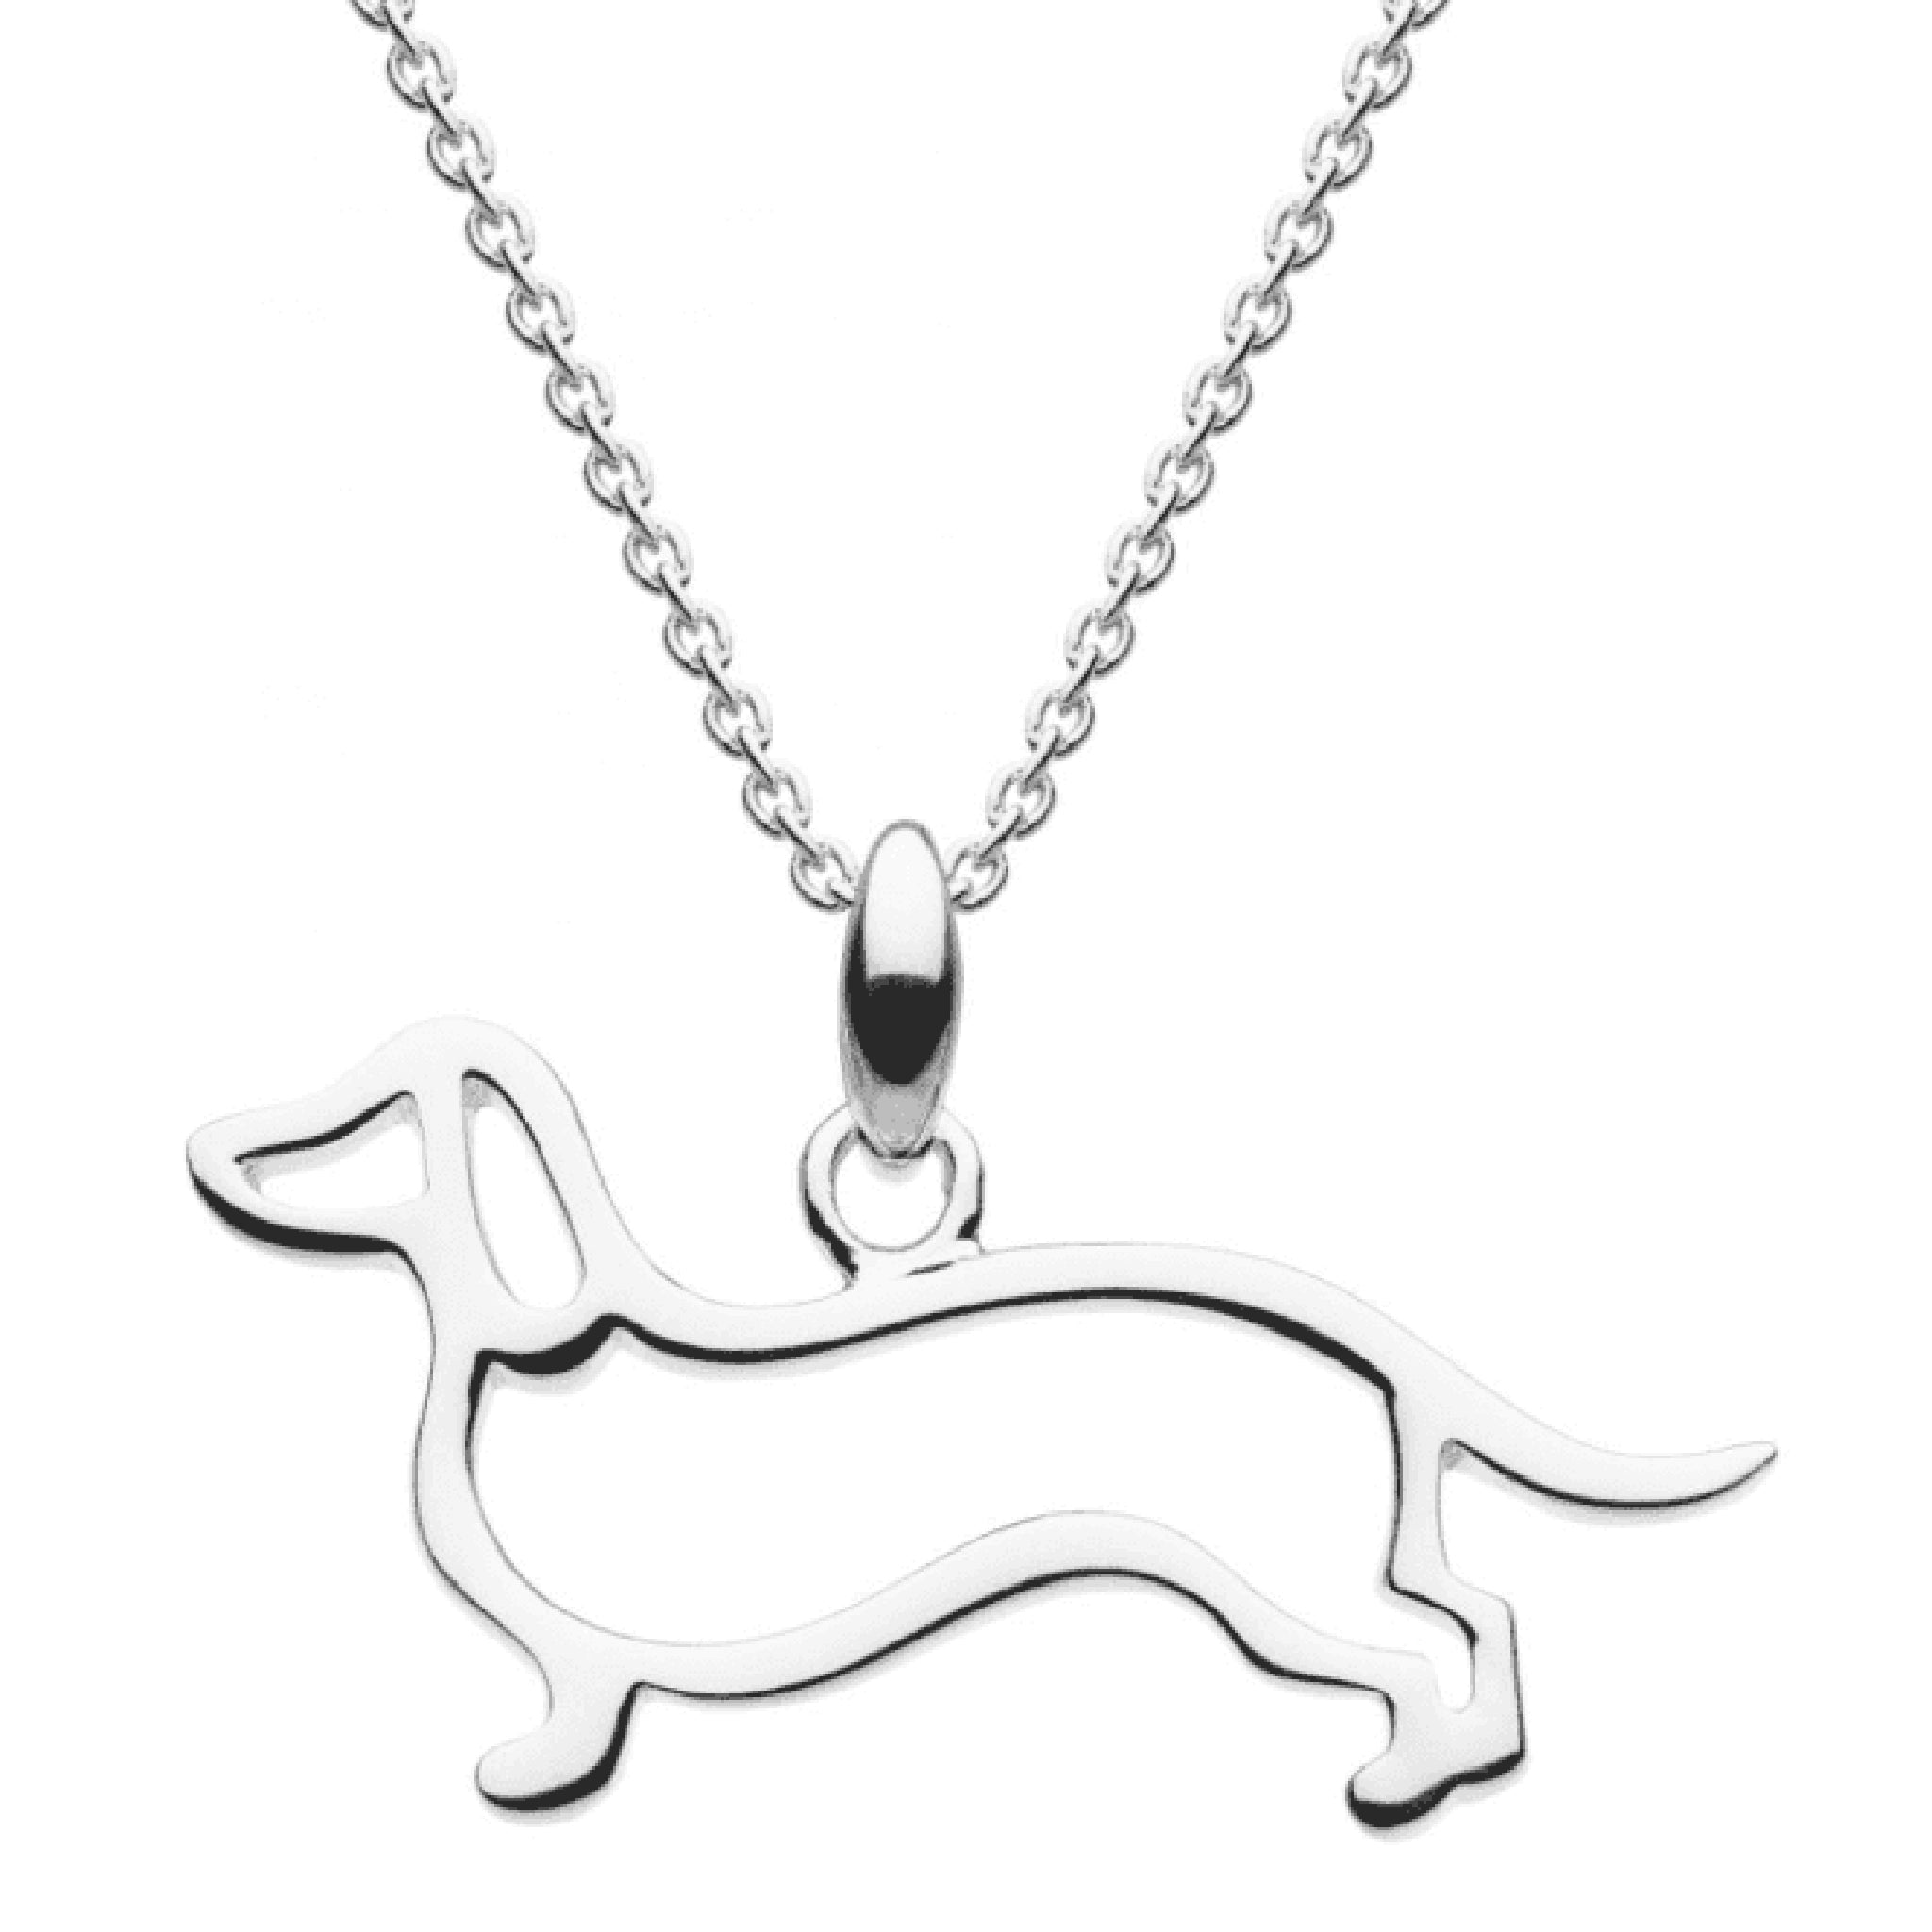 A silver pendant shaped like an open frame dachshund dog